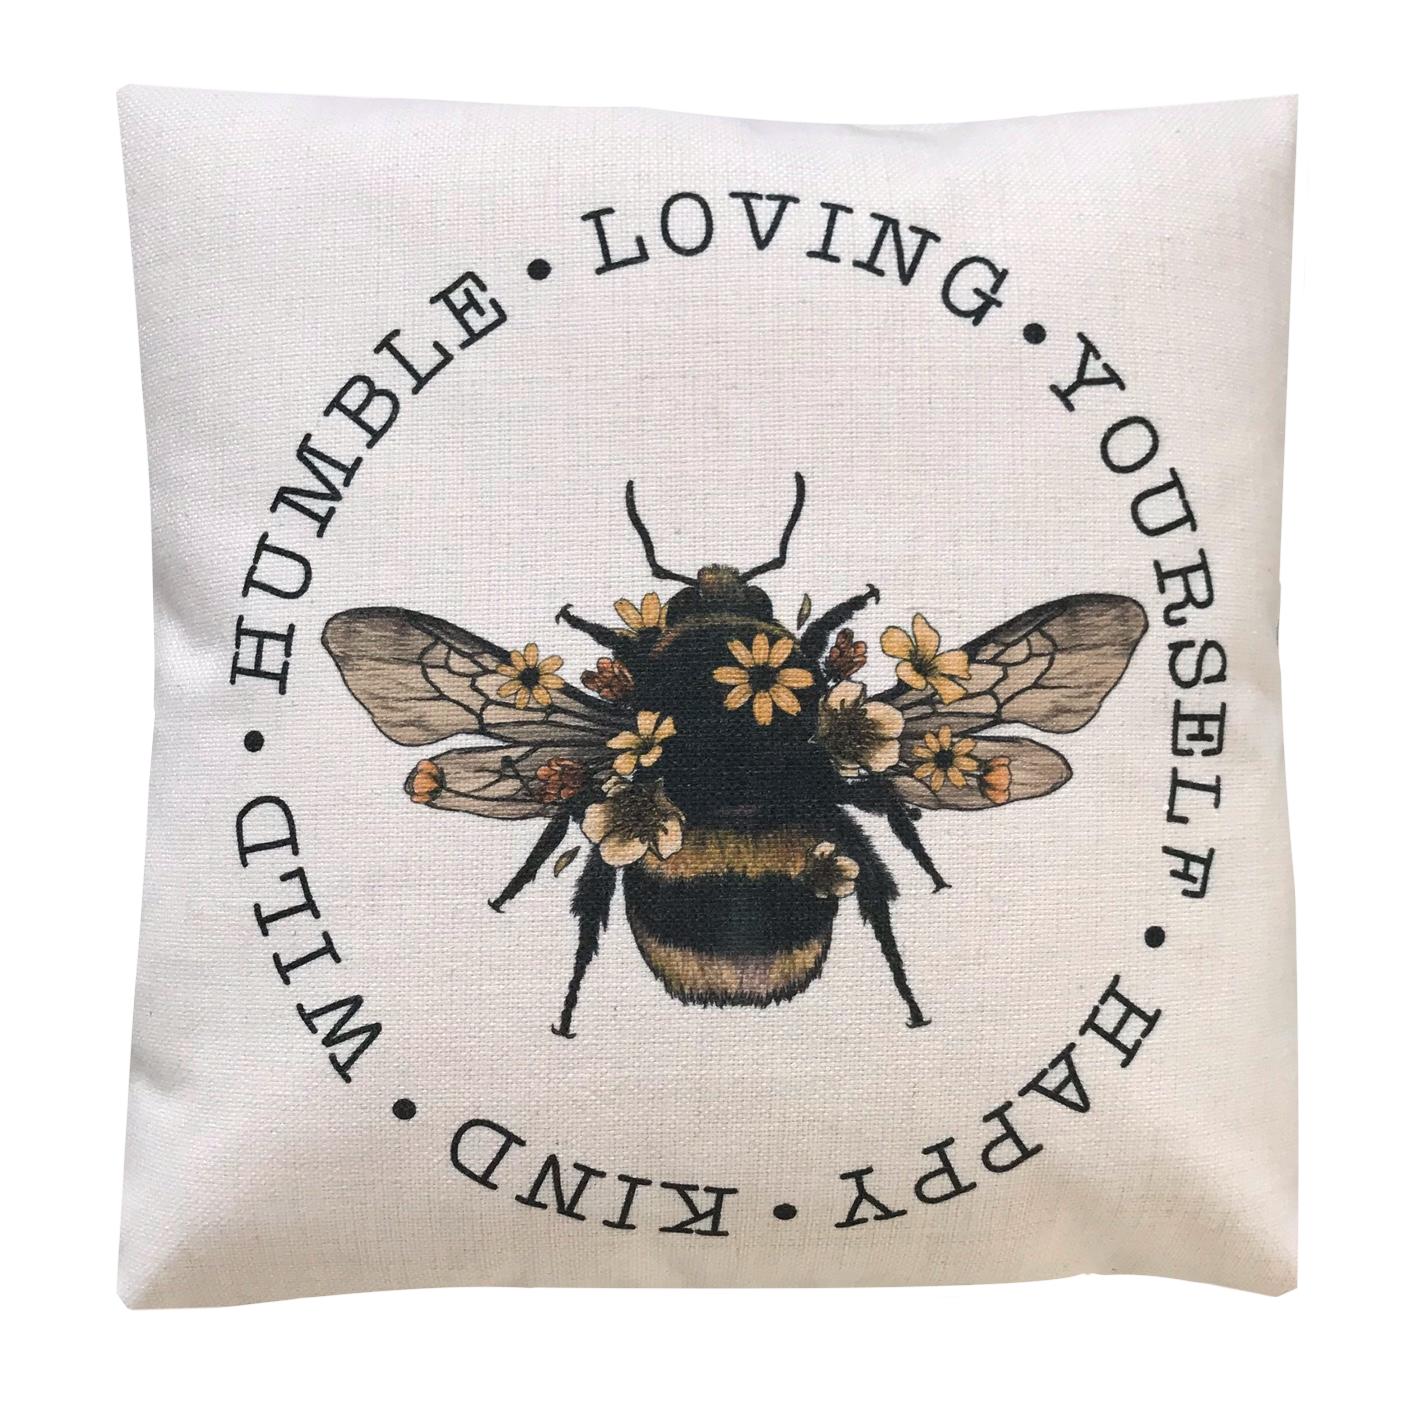 Bee Cushion,Bee Kind,Bee,Bee Yourself,Bee Happy,Pillow,Bee Gift,Home Decor,Home Interiors